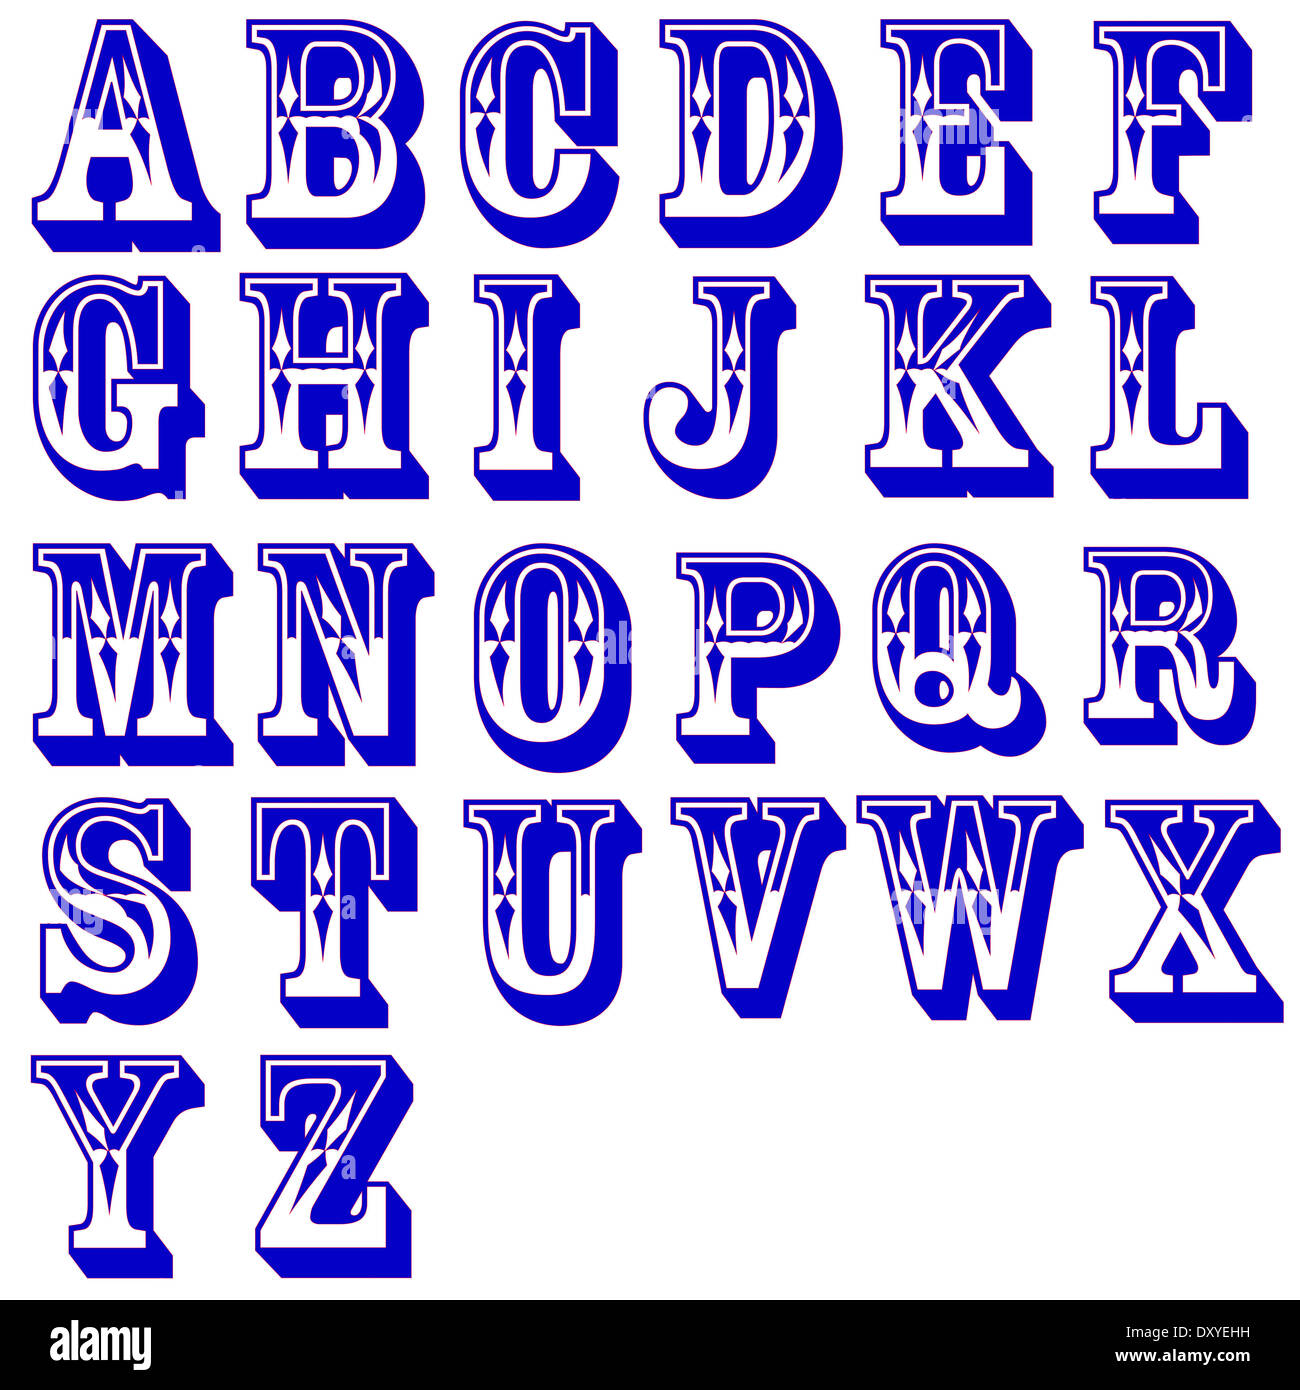 Vector alphabet letters Stock Photo